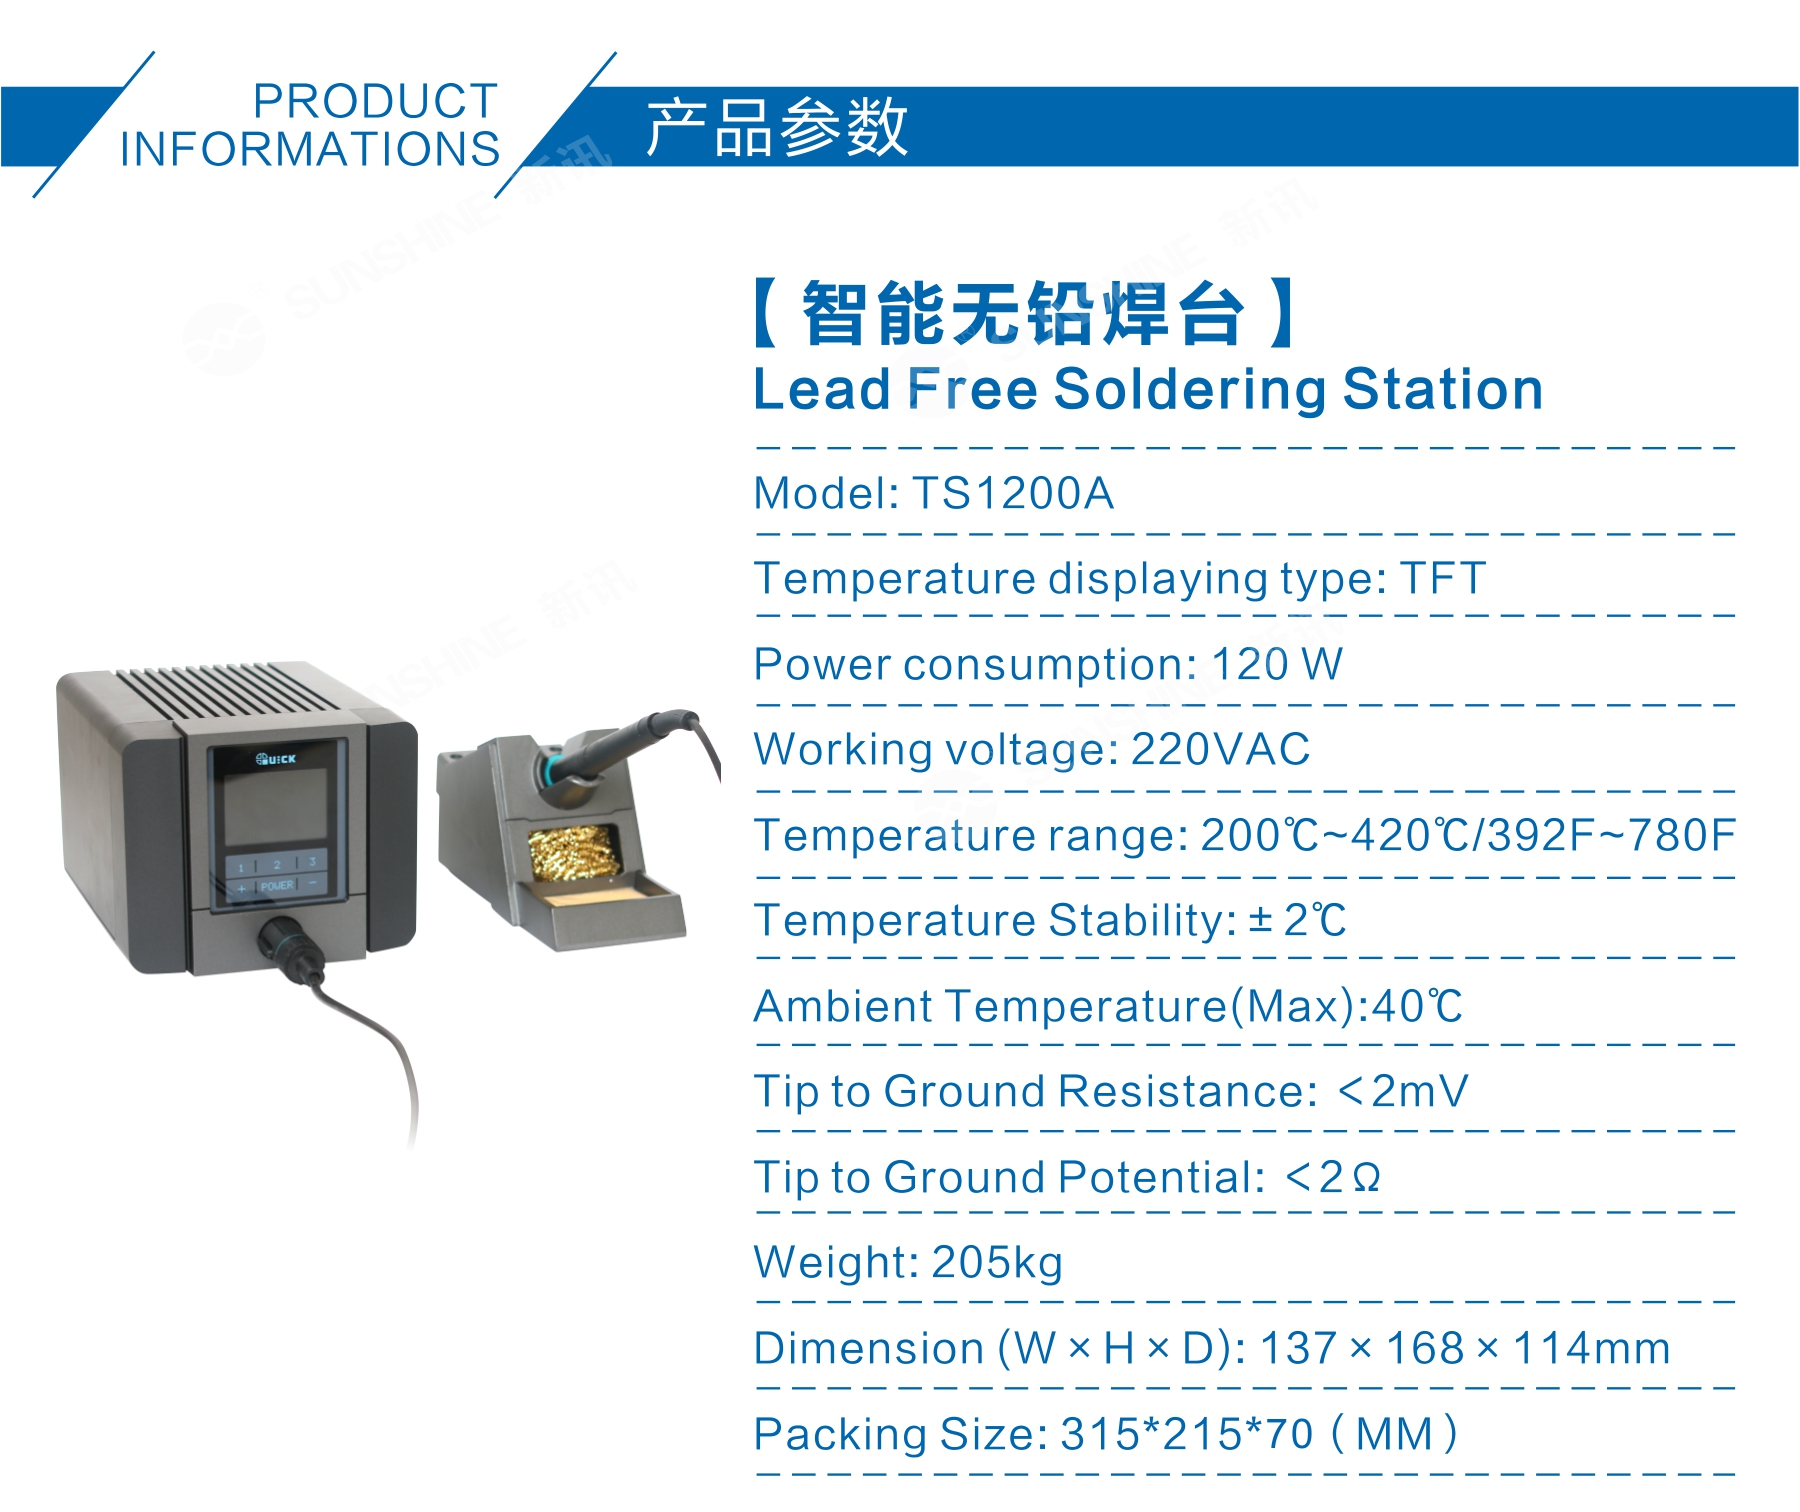 QUICK TS1200A 120W Intelligent Lead Free Solder Station  110V/220V QUICK TS1200A 120W Intelligent Lead Free Solder Station  